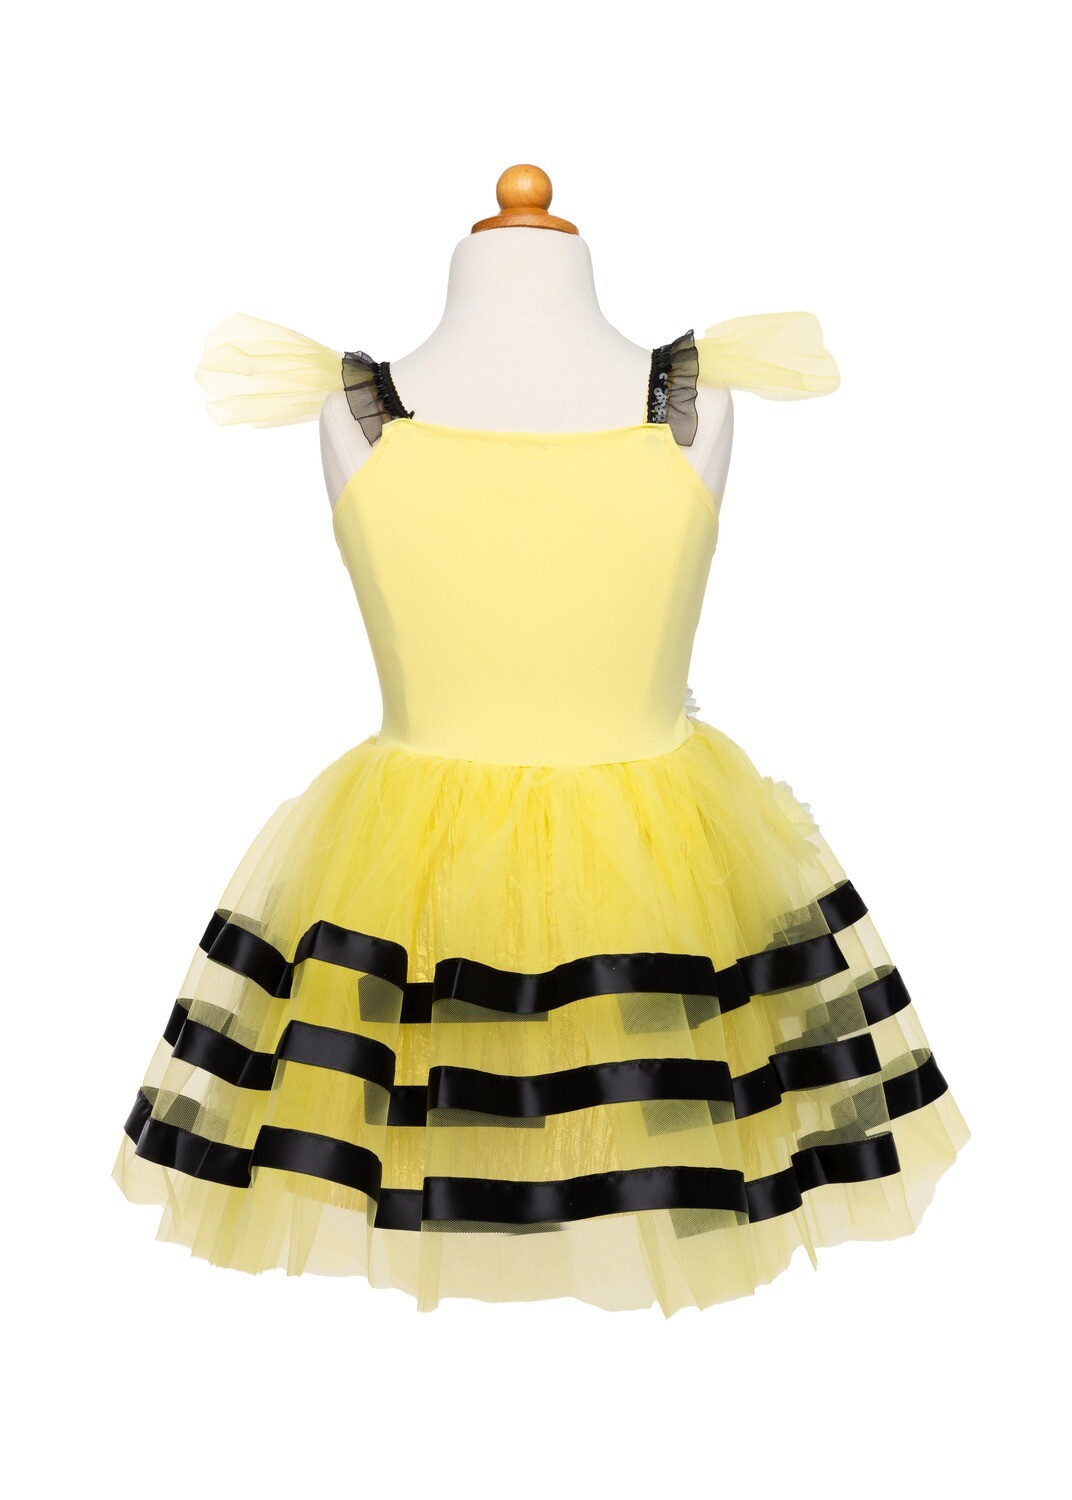 GP Bumble Bee Dress & Headband, Yellow/Black, Size 3-4